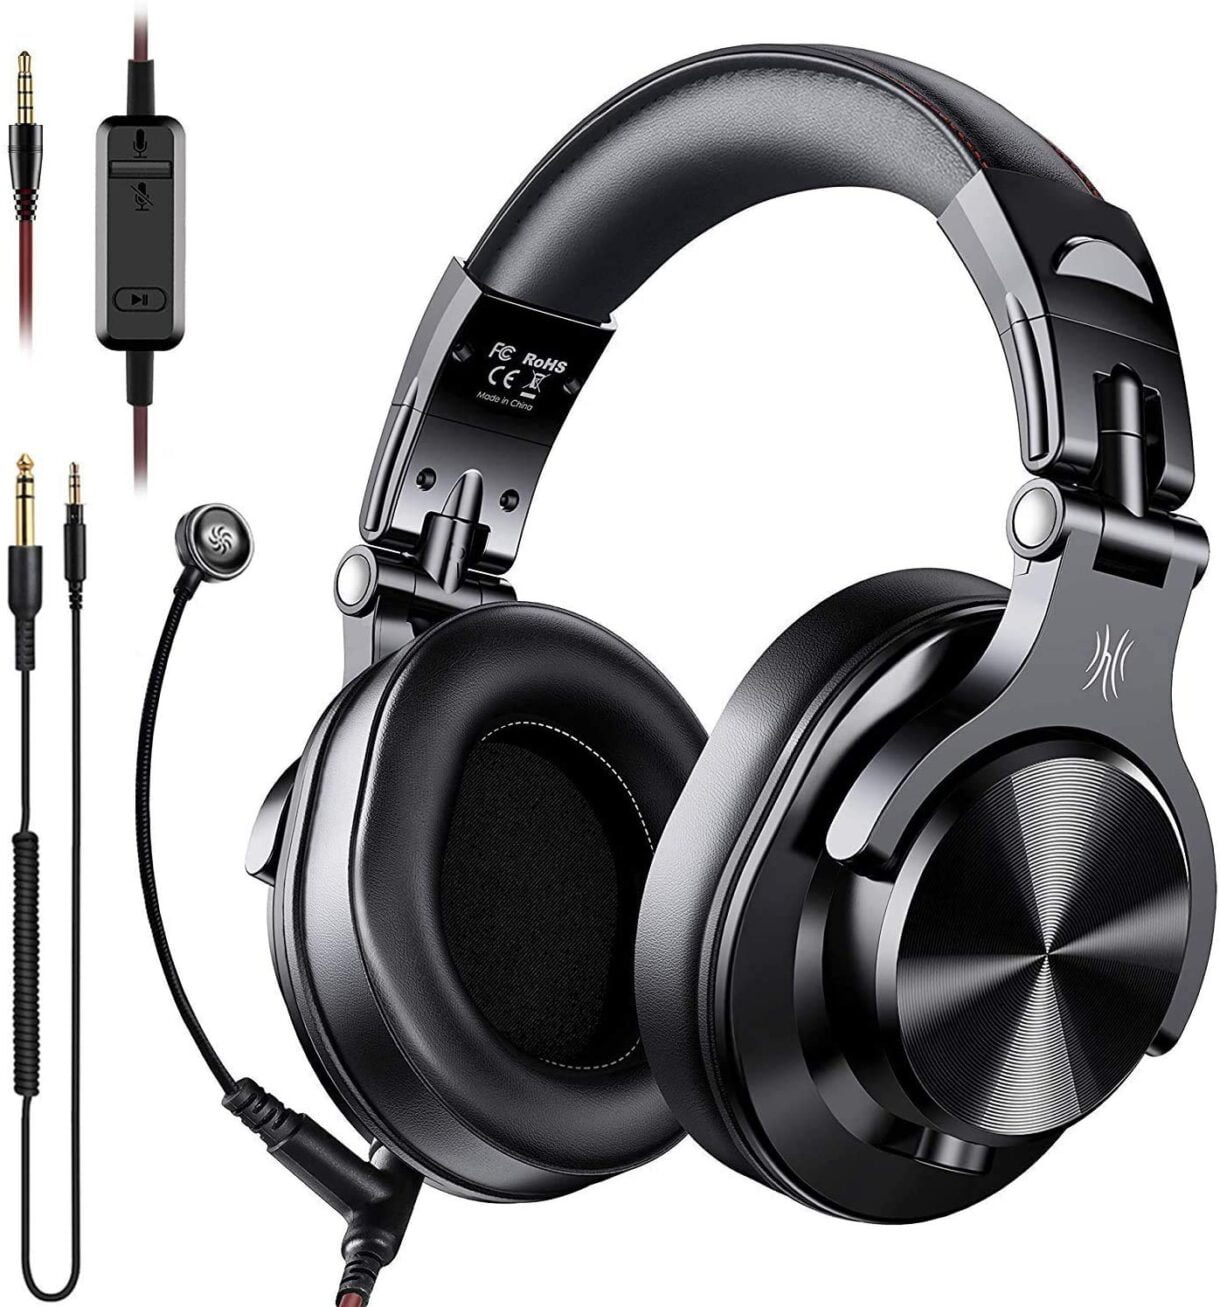 OneOdio A71 Over Ear Headphones